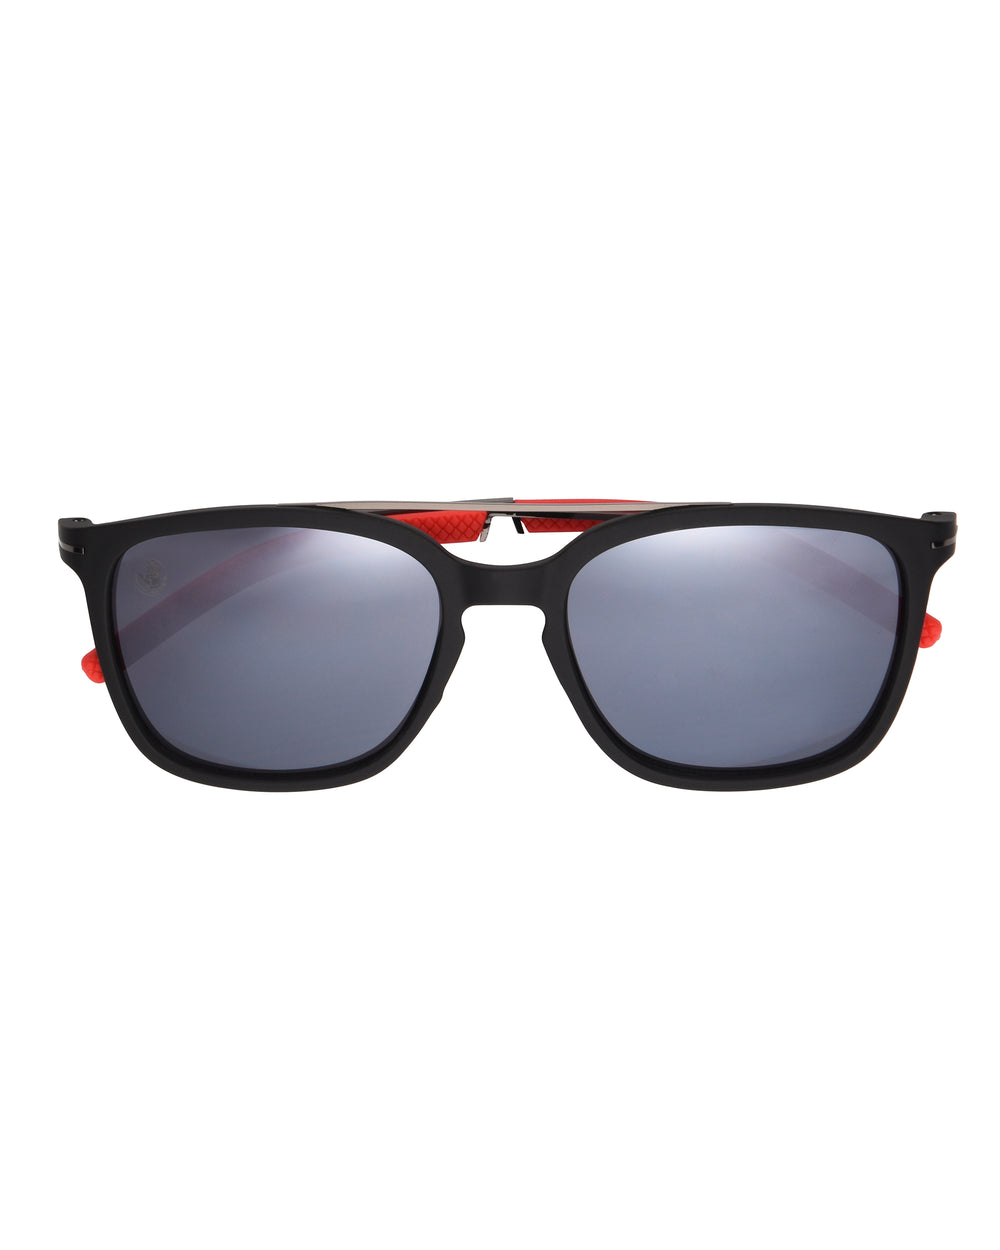 Emi Square Sunglasses - Black/Red